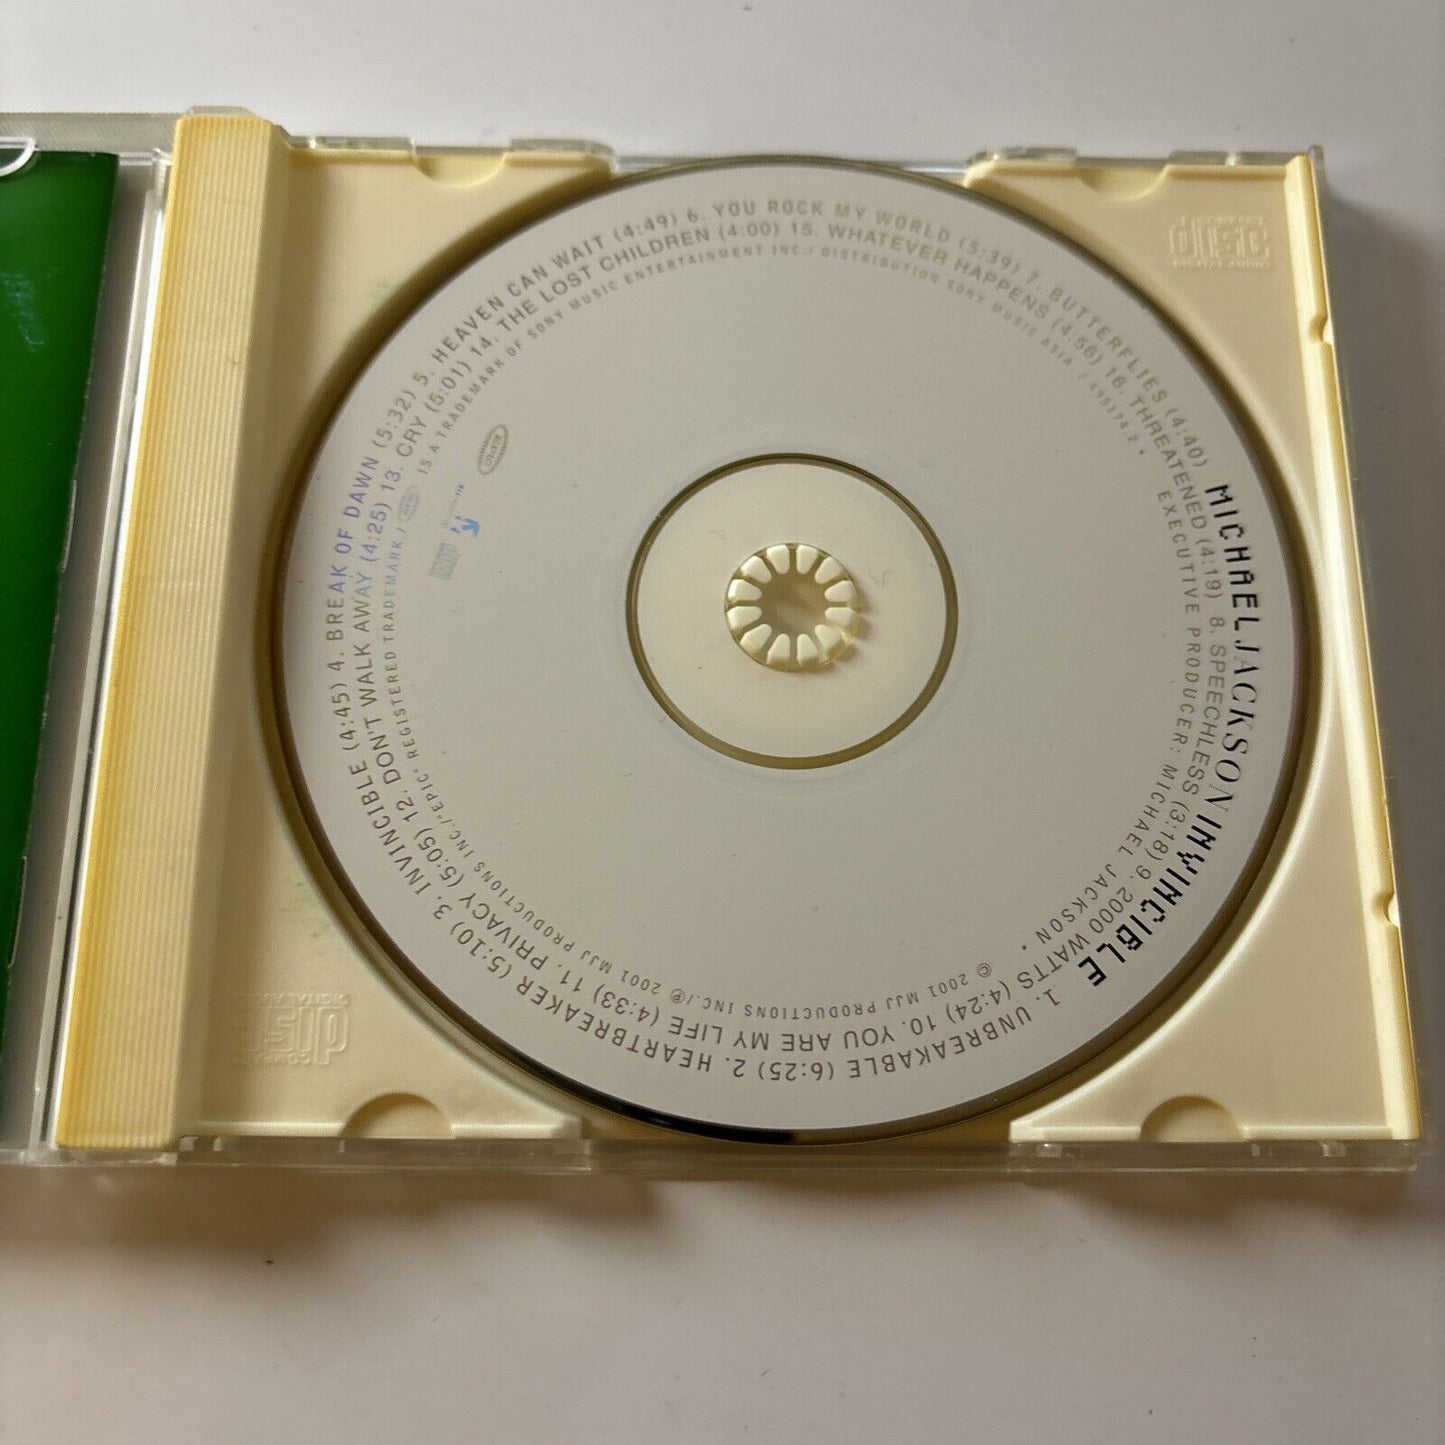 Michael Jackson - Invincible (CD, 2001) 495174.2 Green Artwork